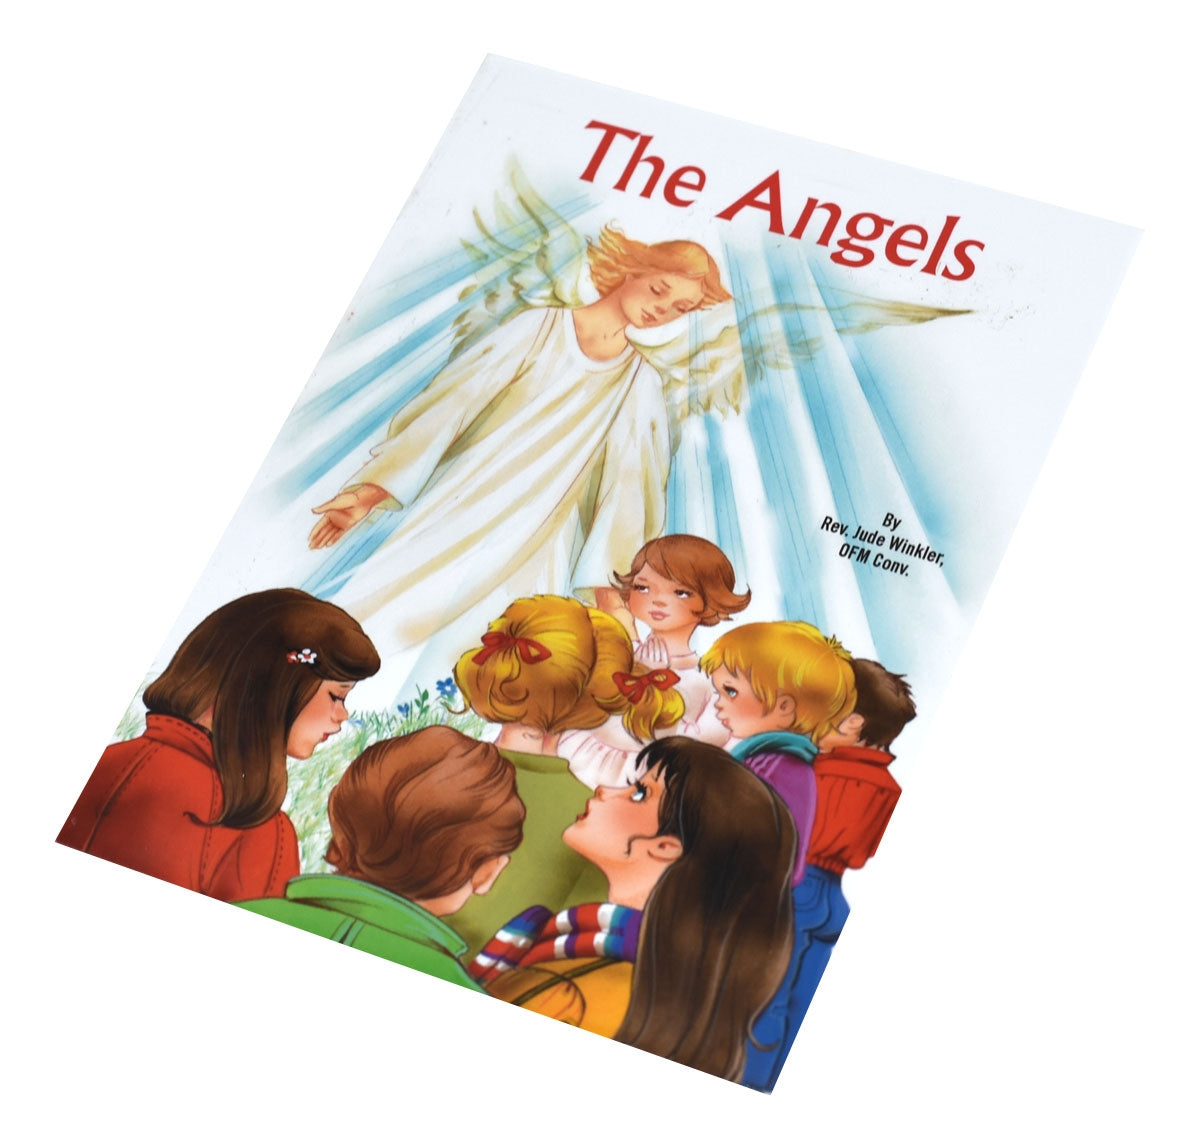 The Angels Catholic Book